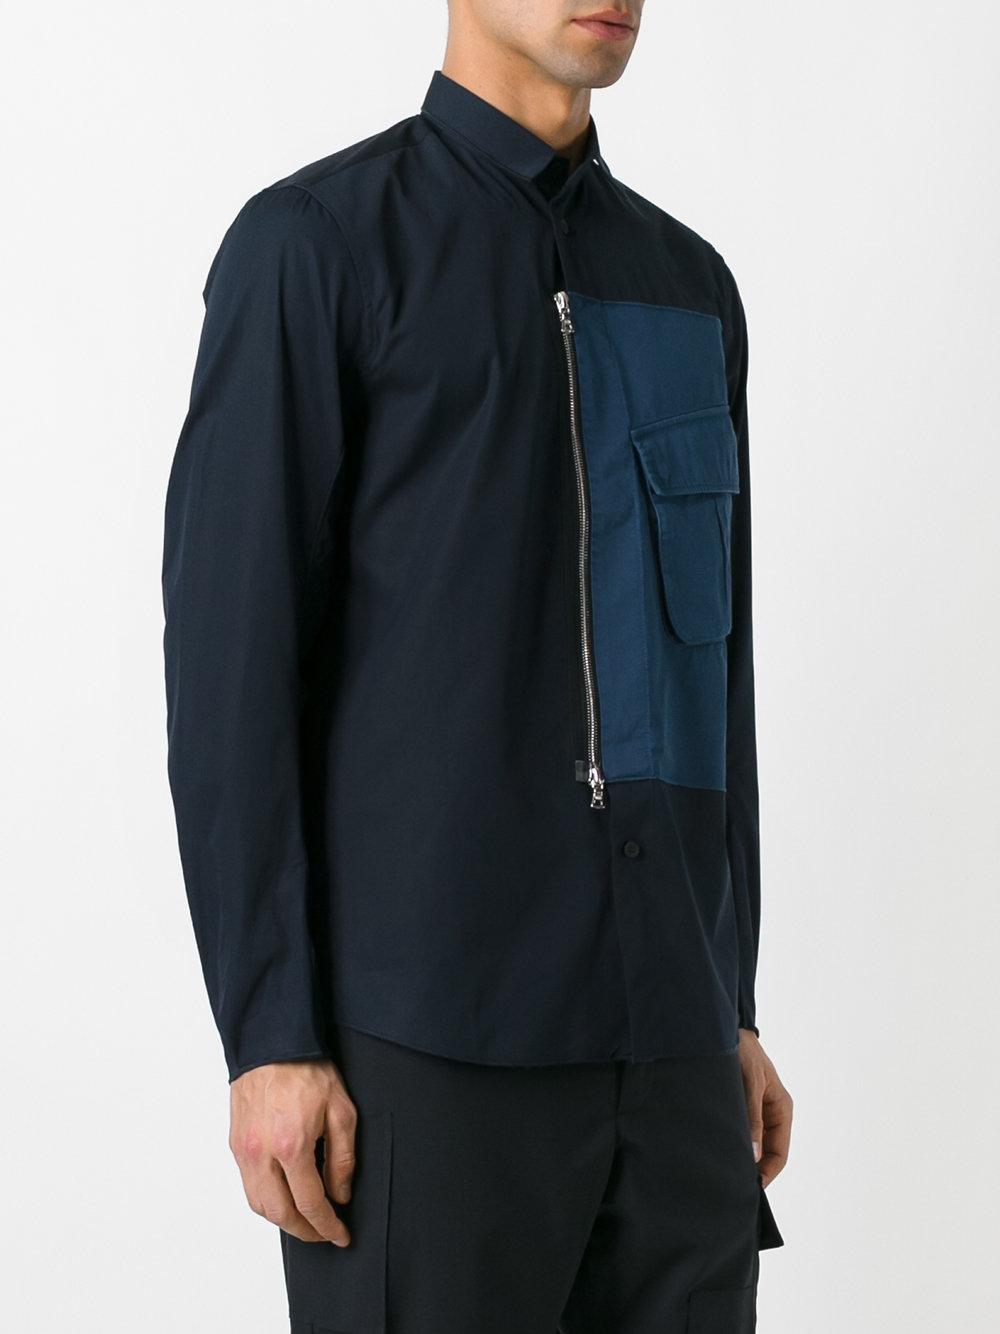 OAMC Cotton Zipped Cargo Pocket Shirt in Blue for Men - Lyst